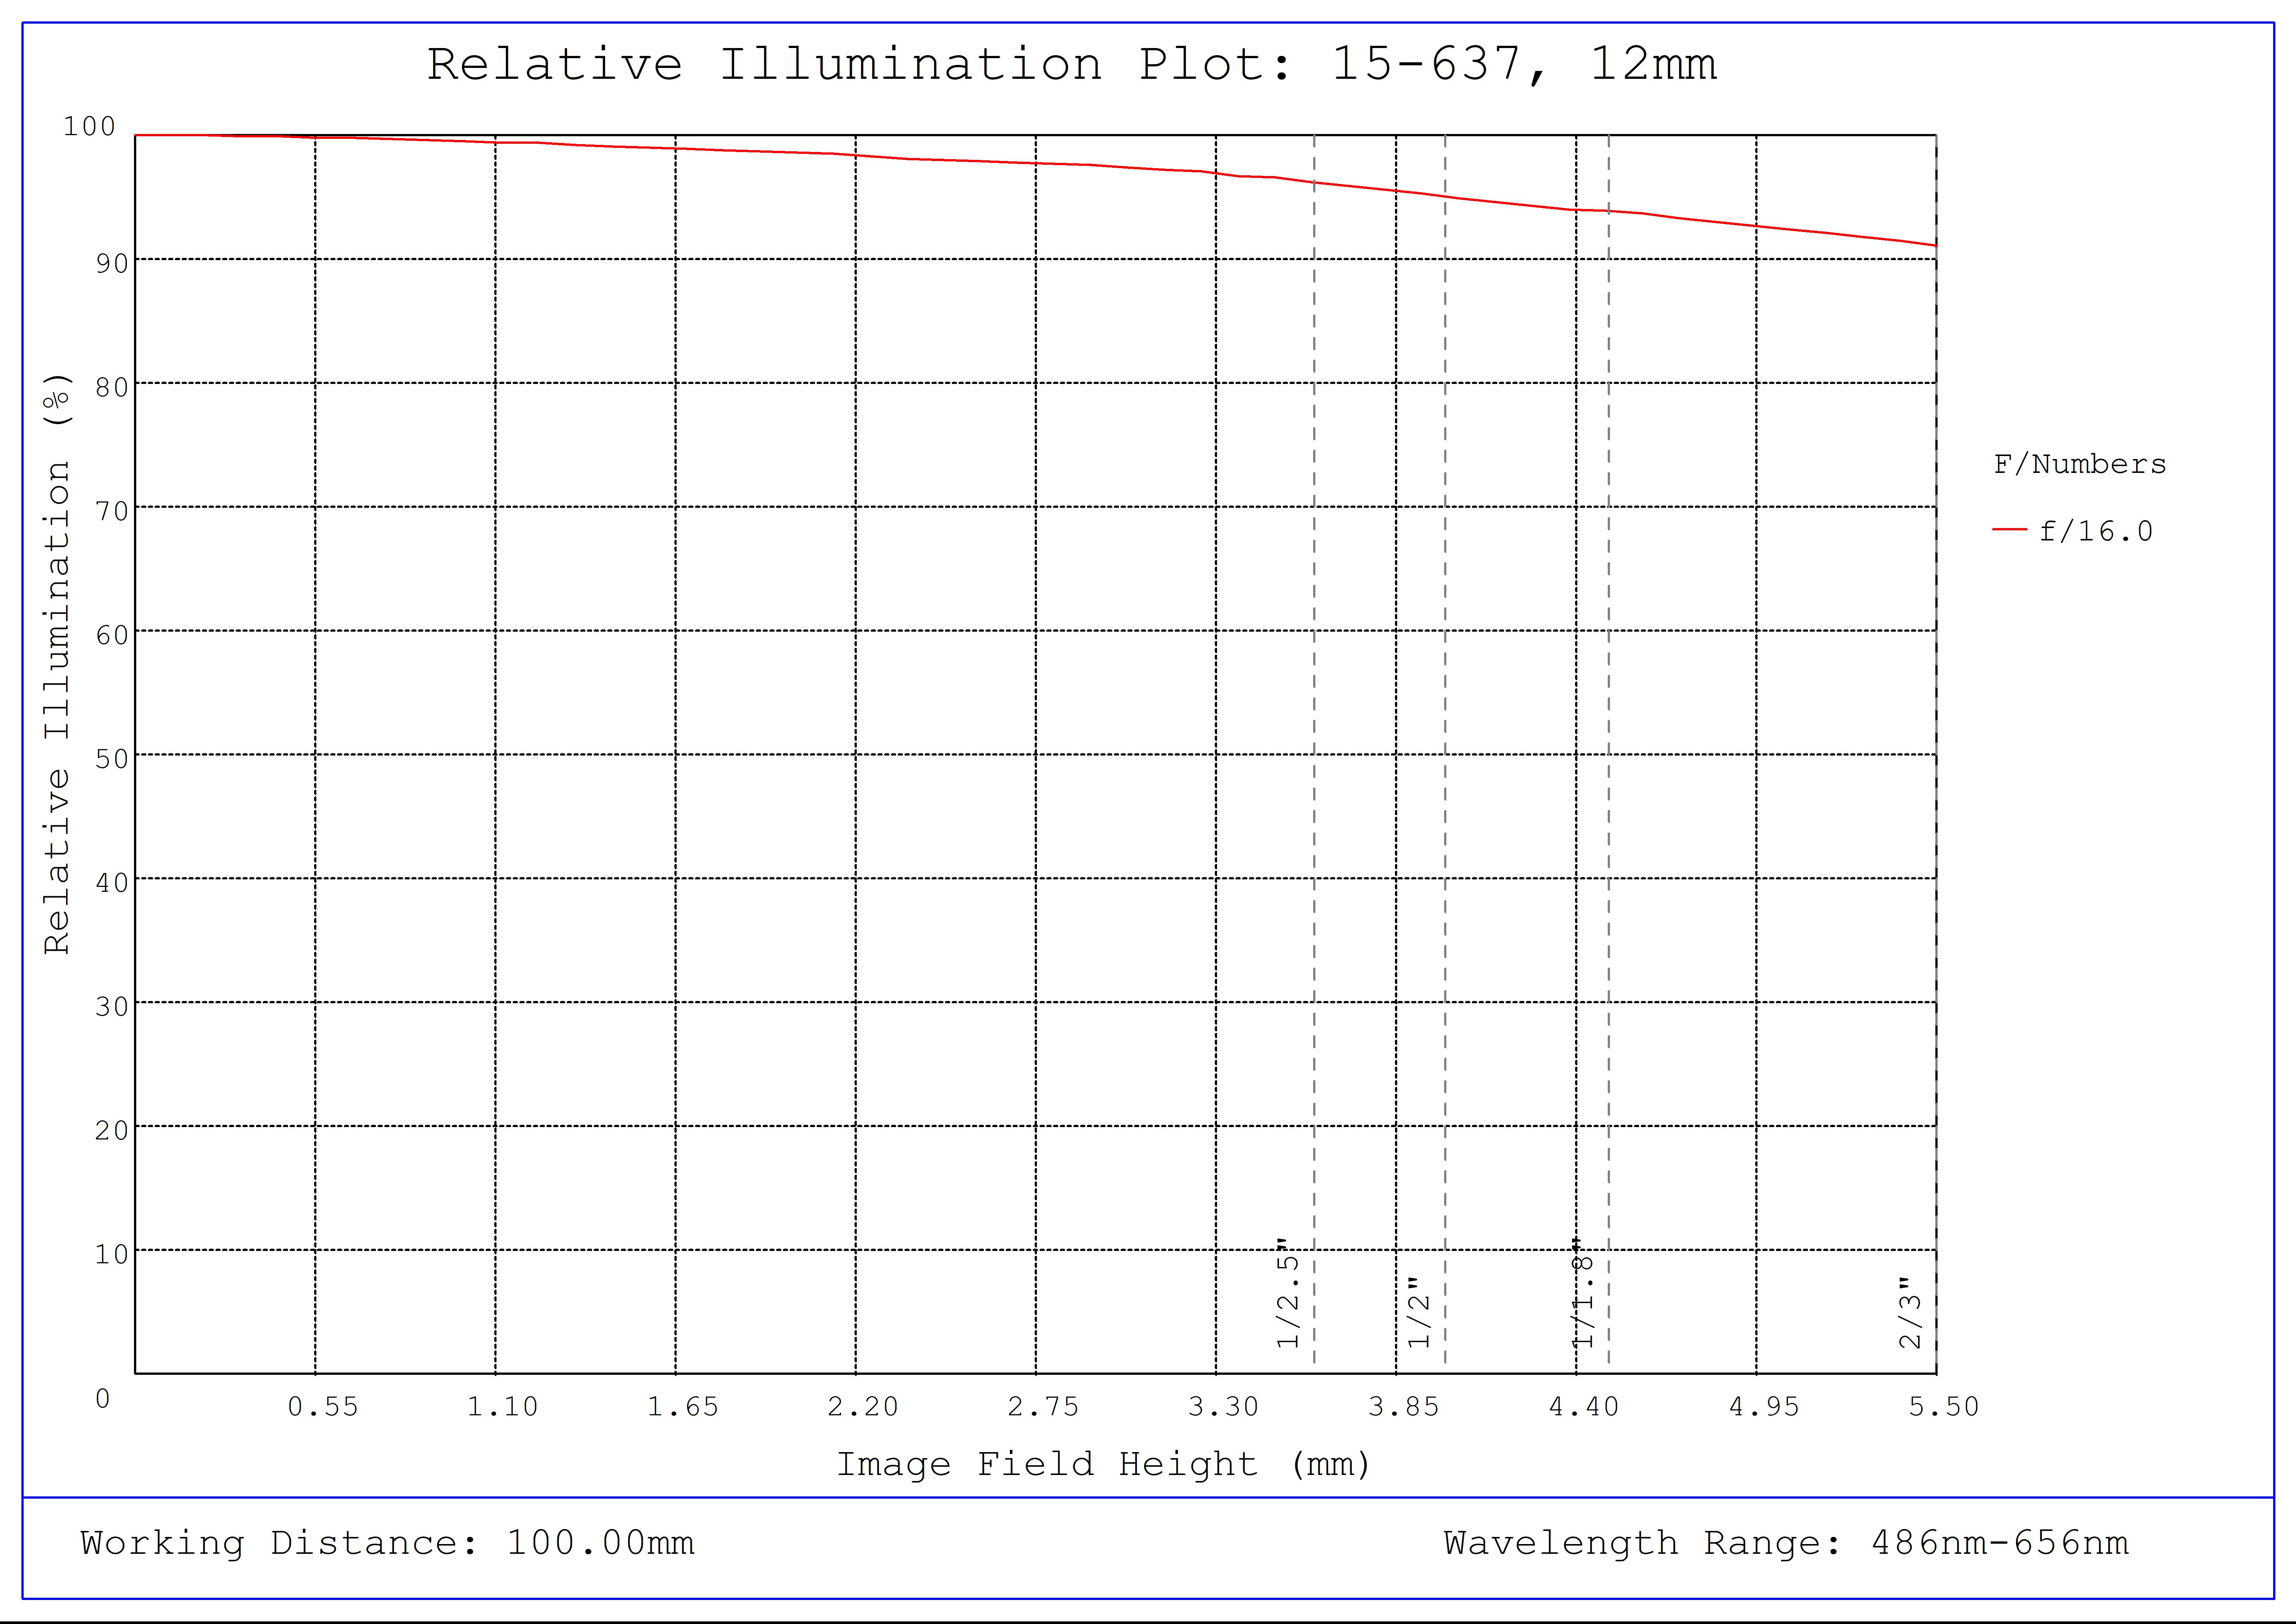 #15-637, 12mm, f/16 Cw Series Fixed Focal Length Lens, Relative Illumination Plot